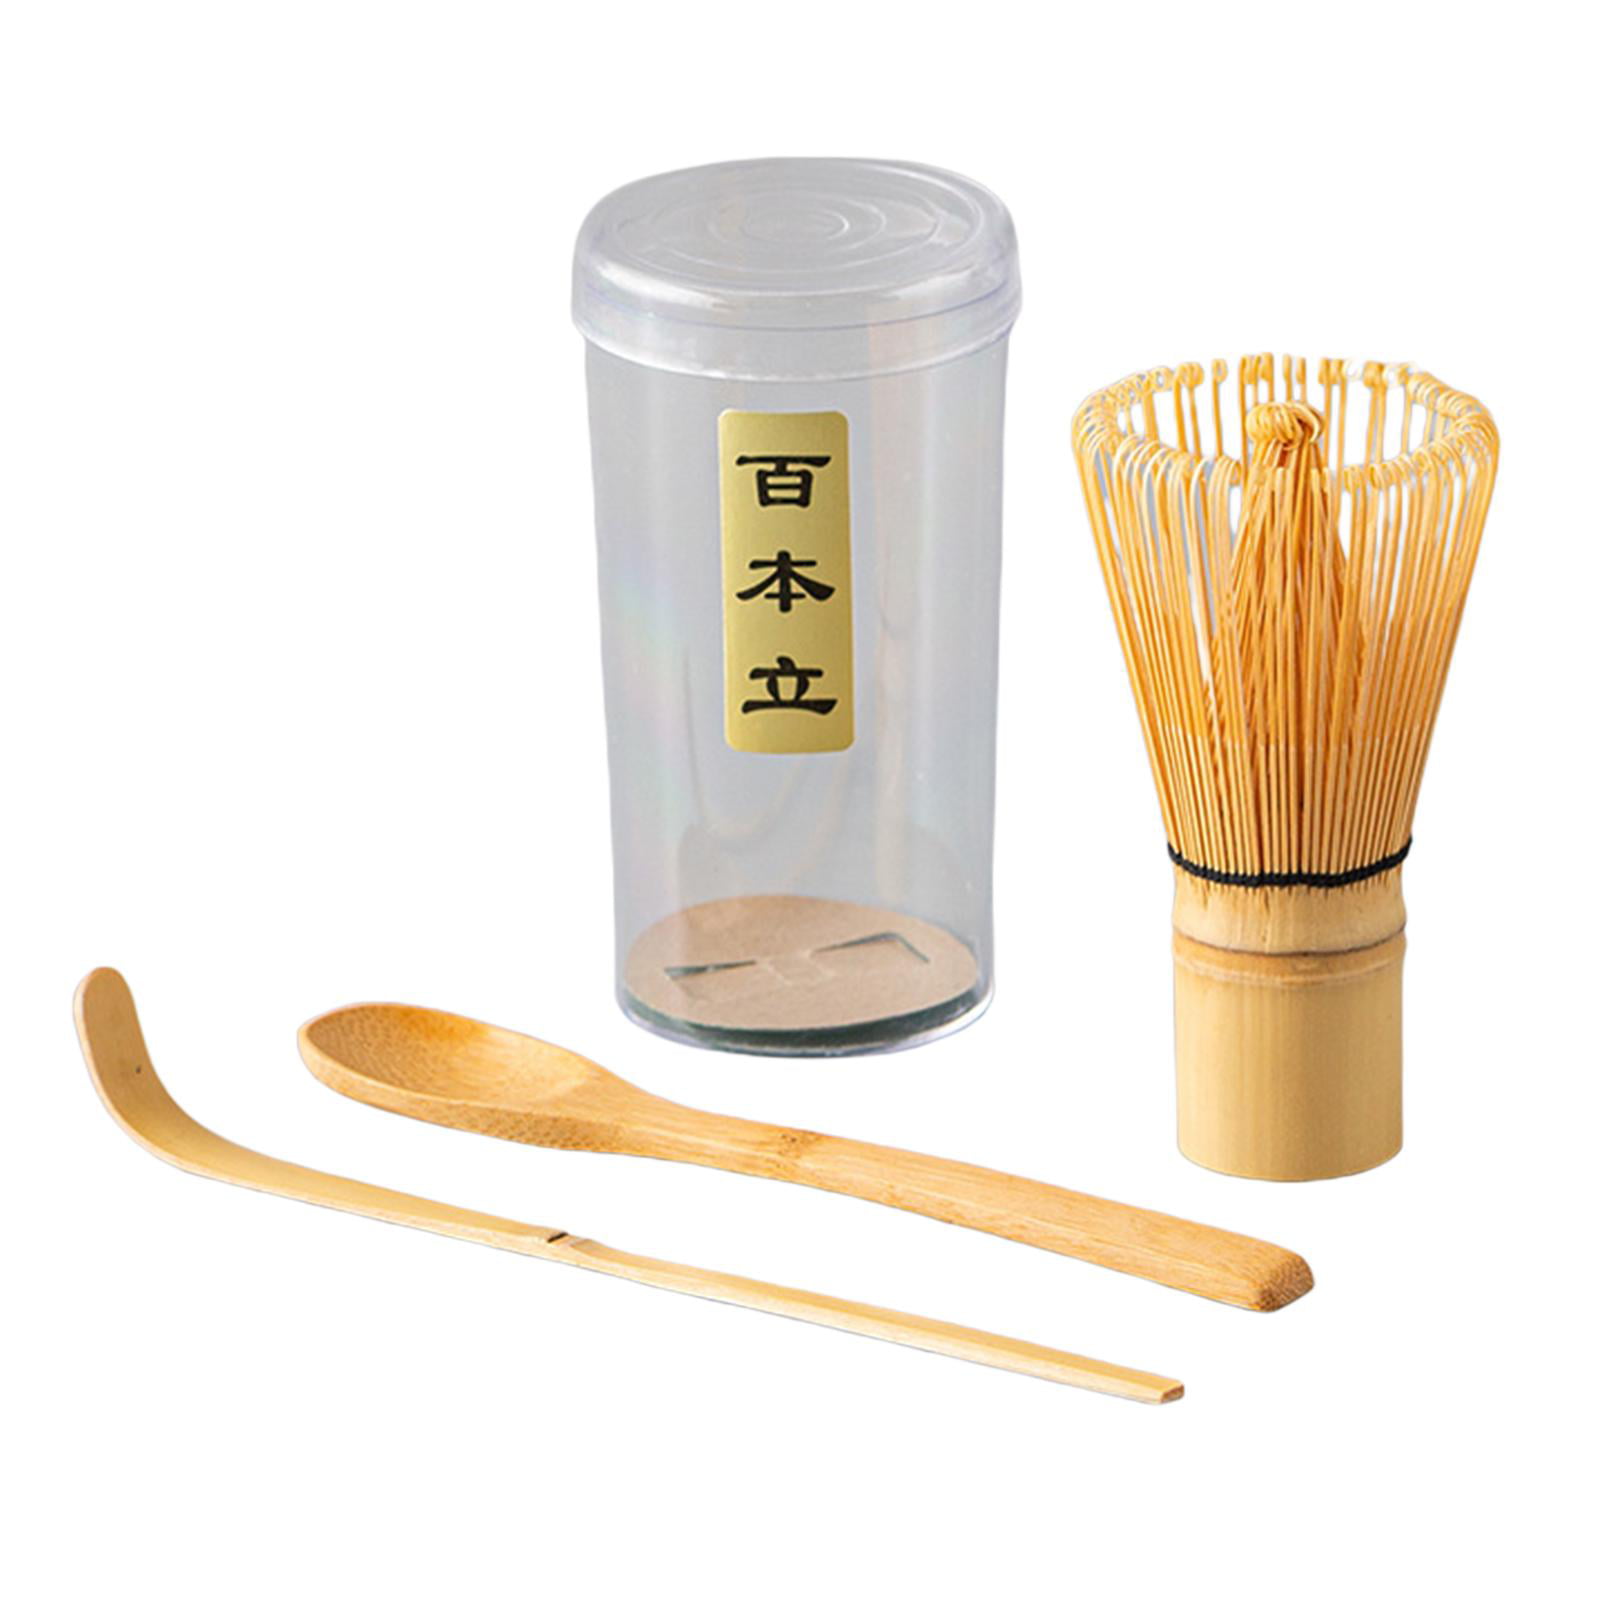 Bamboo Whisk (Chasen) and Hooked Bamboo Scoop (Chashaku) - Matcha Tea Whisk  for Matcha Tea Preparation - MATCHA DNA Brand - Traditional Matcha Whisk